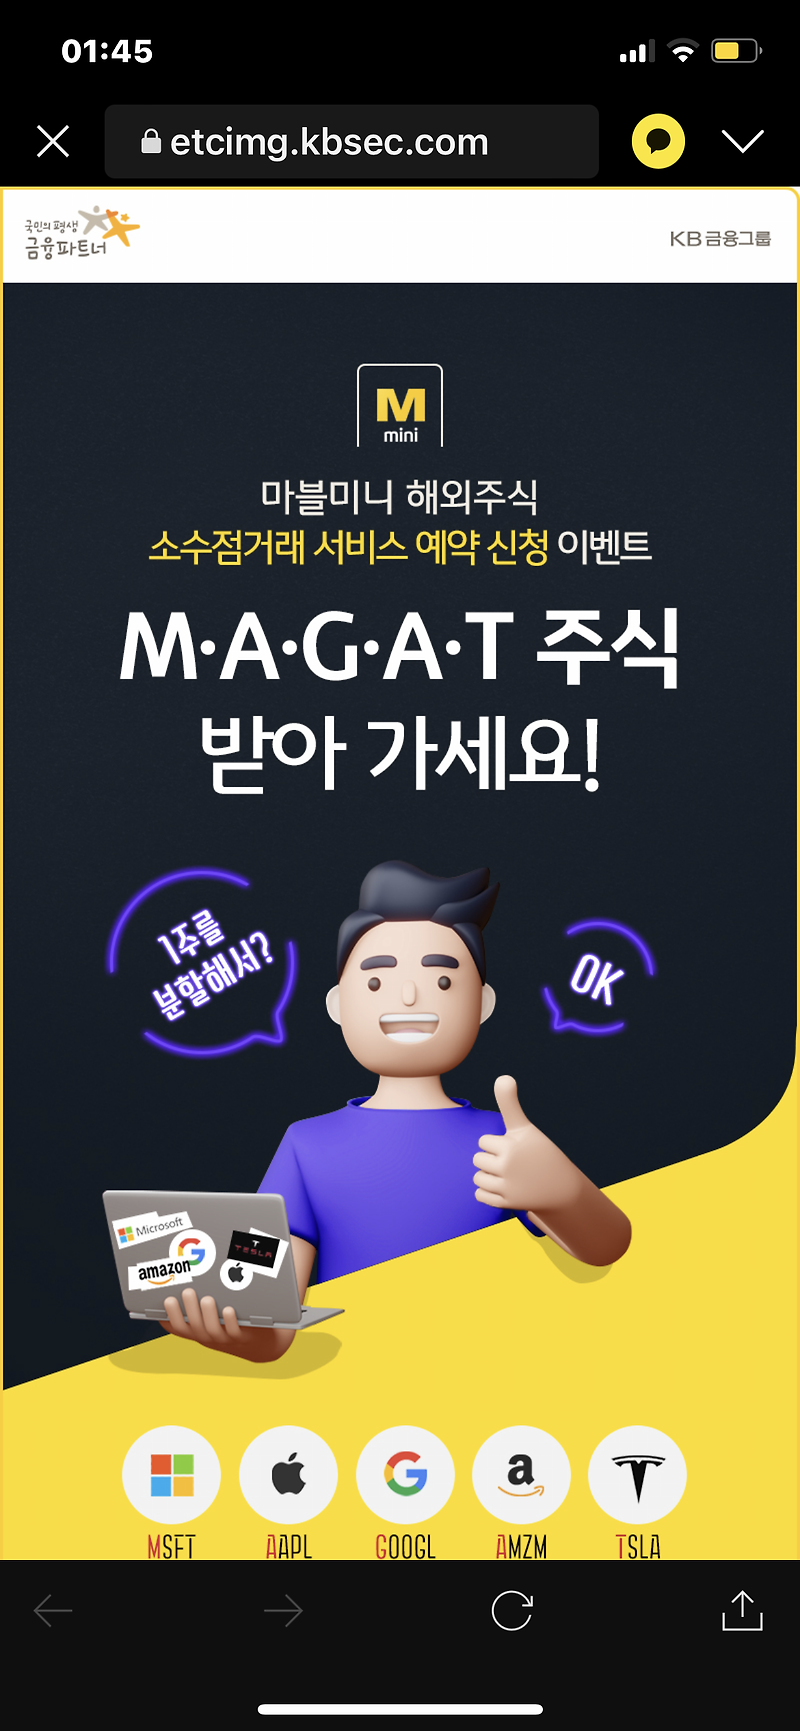 Kb증권 MAGAT 주식 소수점 거래 서비스 예약 신청 이벤트 테슬라 1주 사기